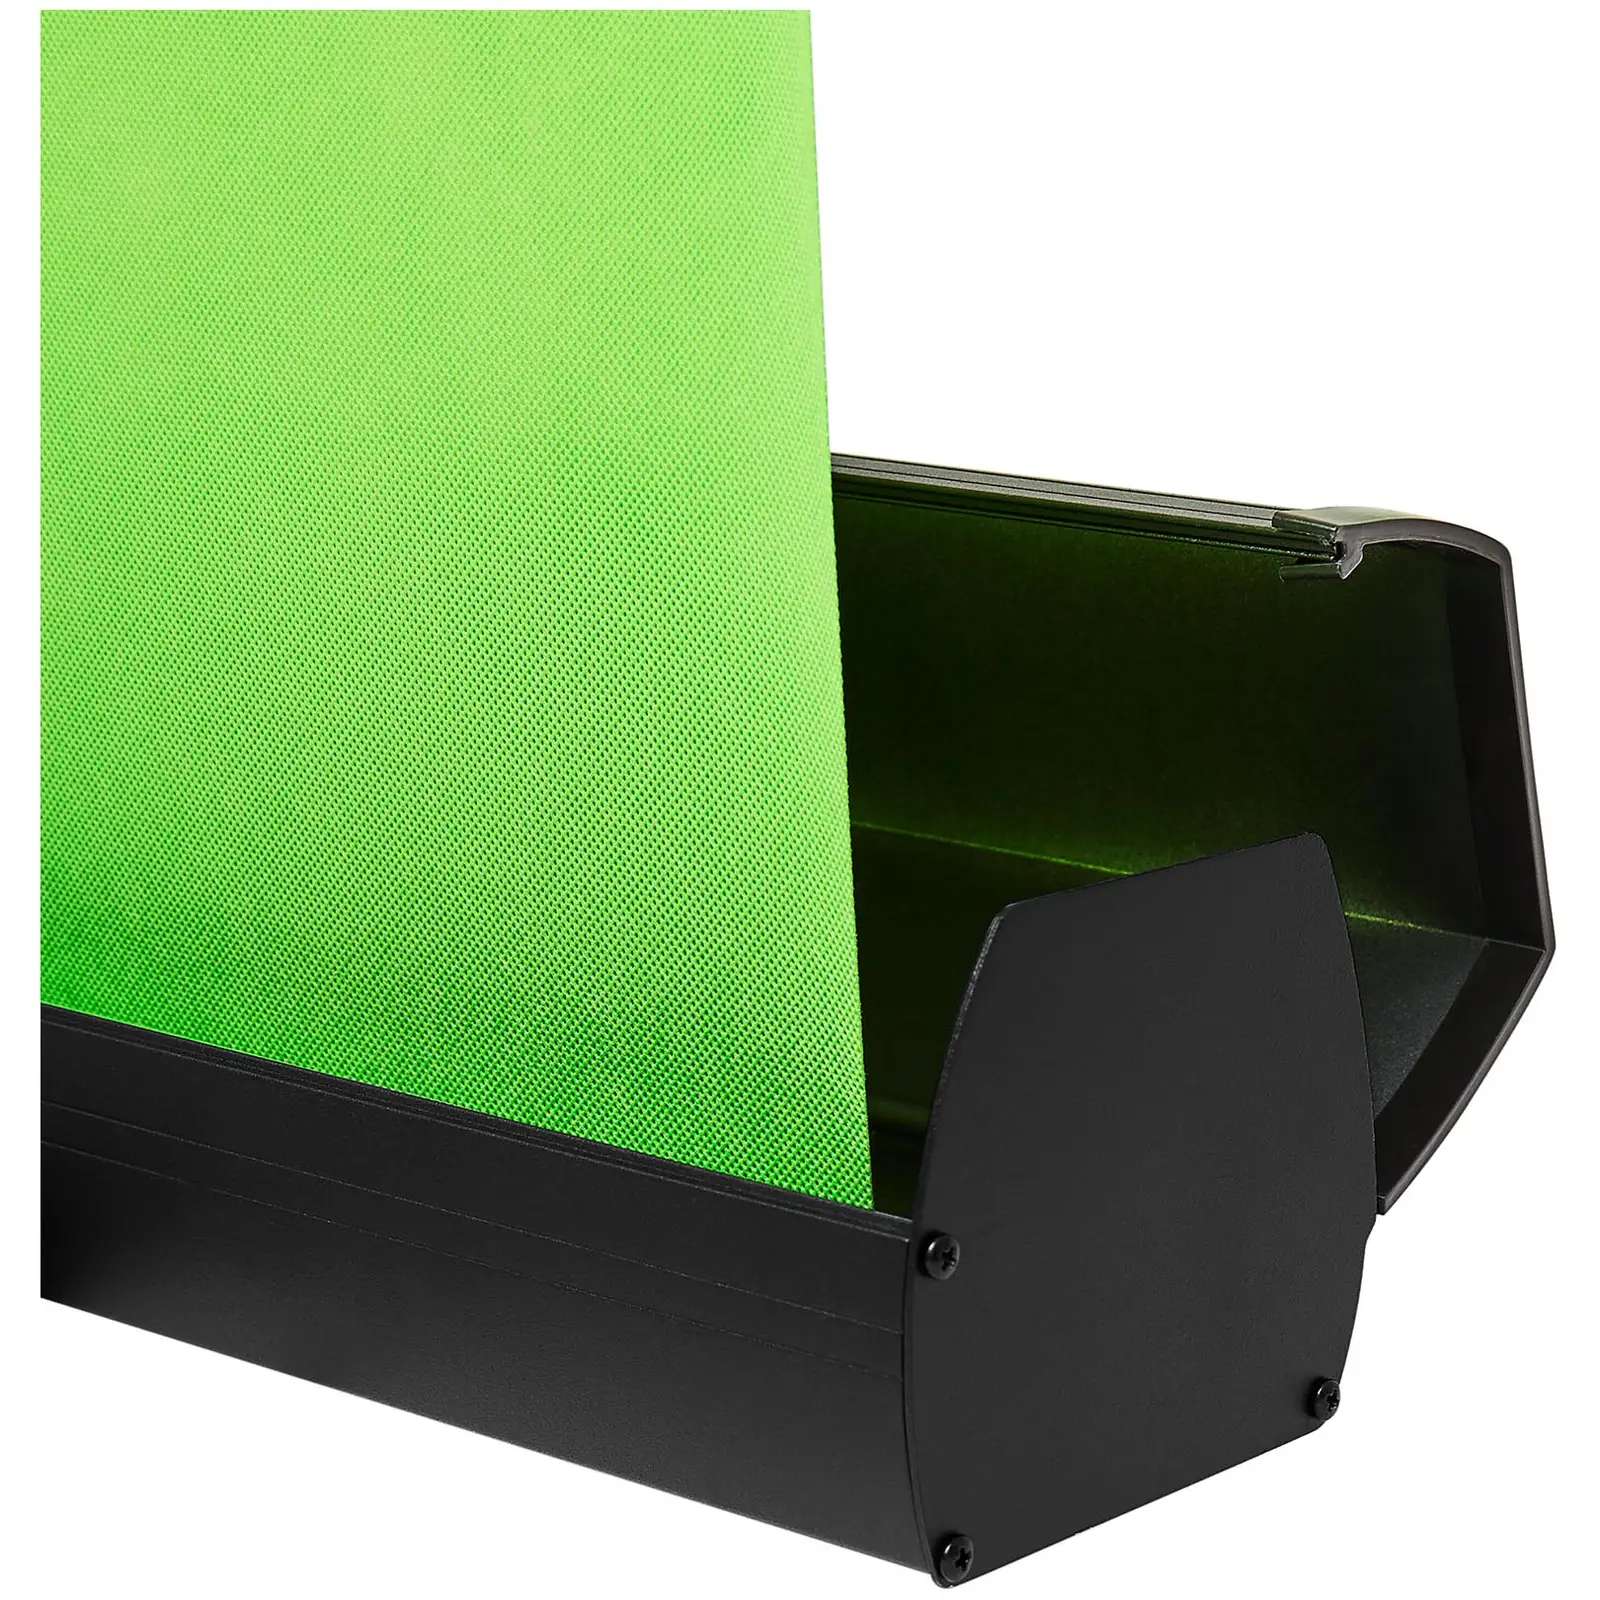 Green Screen - roll-up - 144 x 199 cm